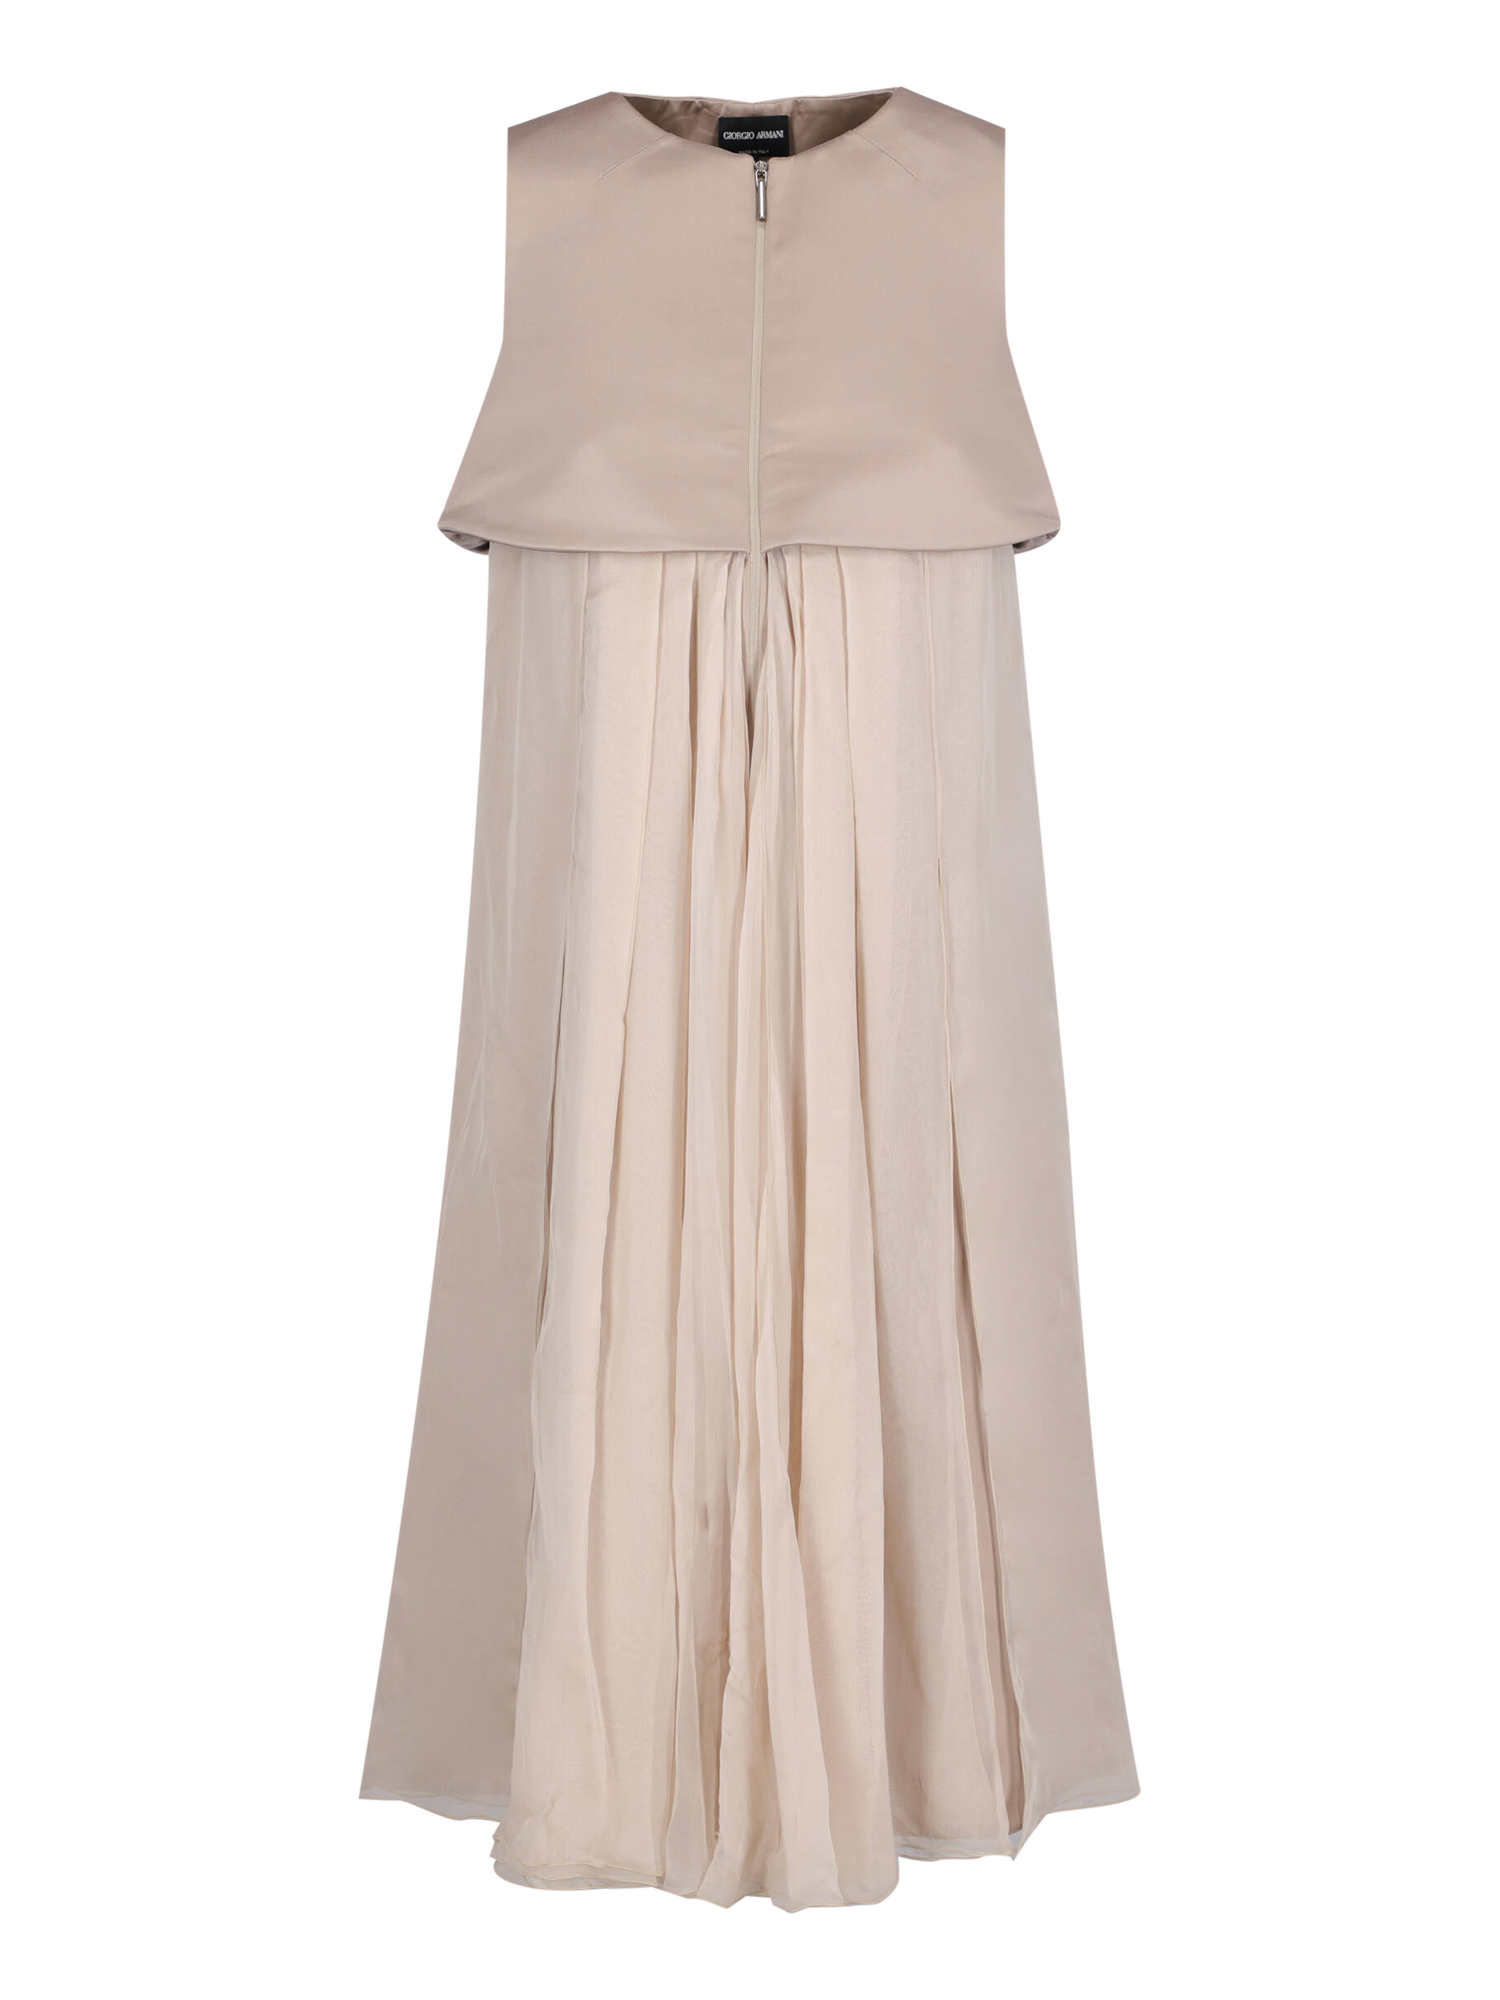 Robes Pour Femme - Giorgio Armani - En Silk Beige - Taille:  -